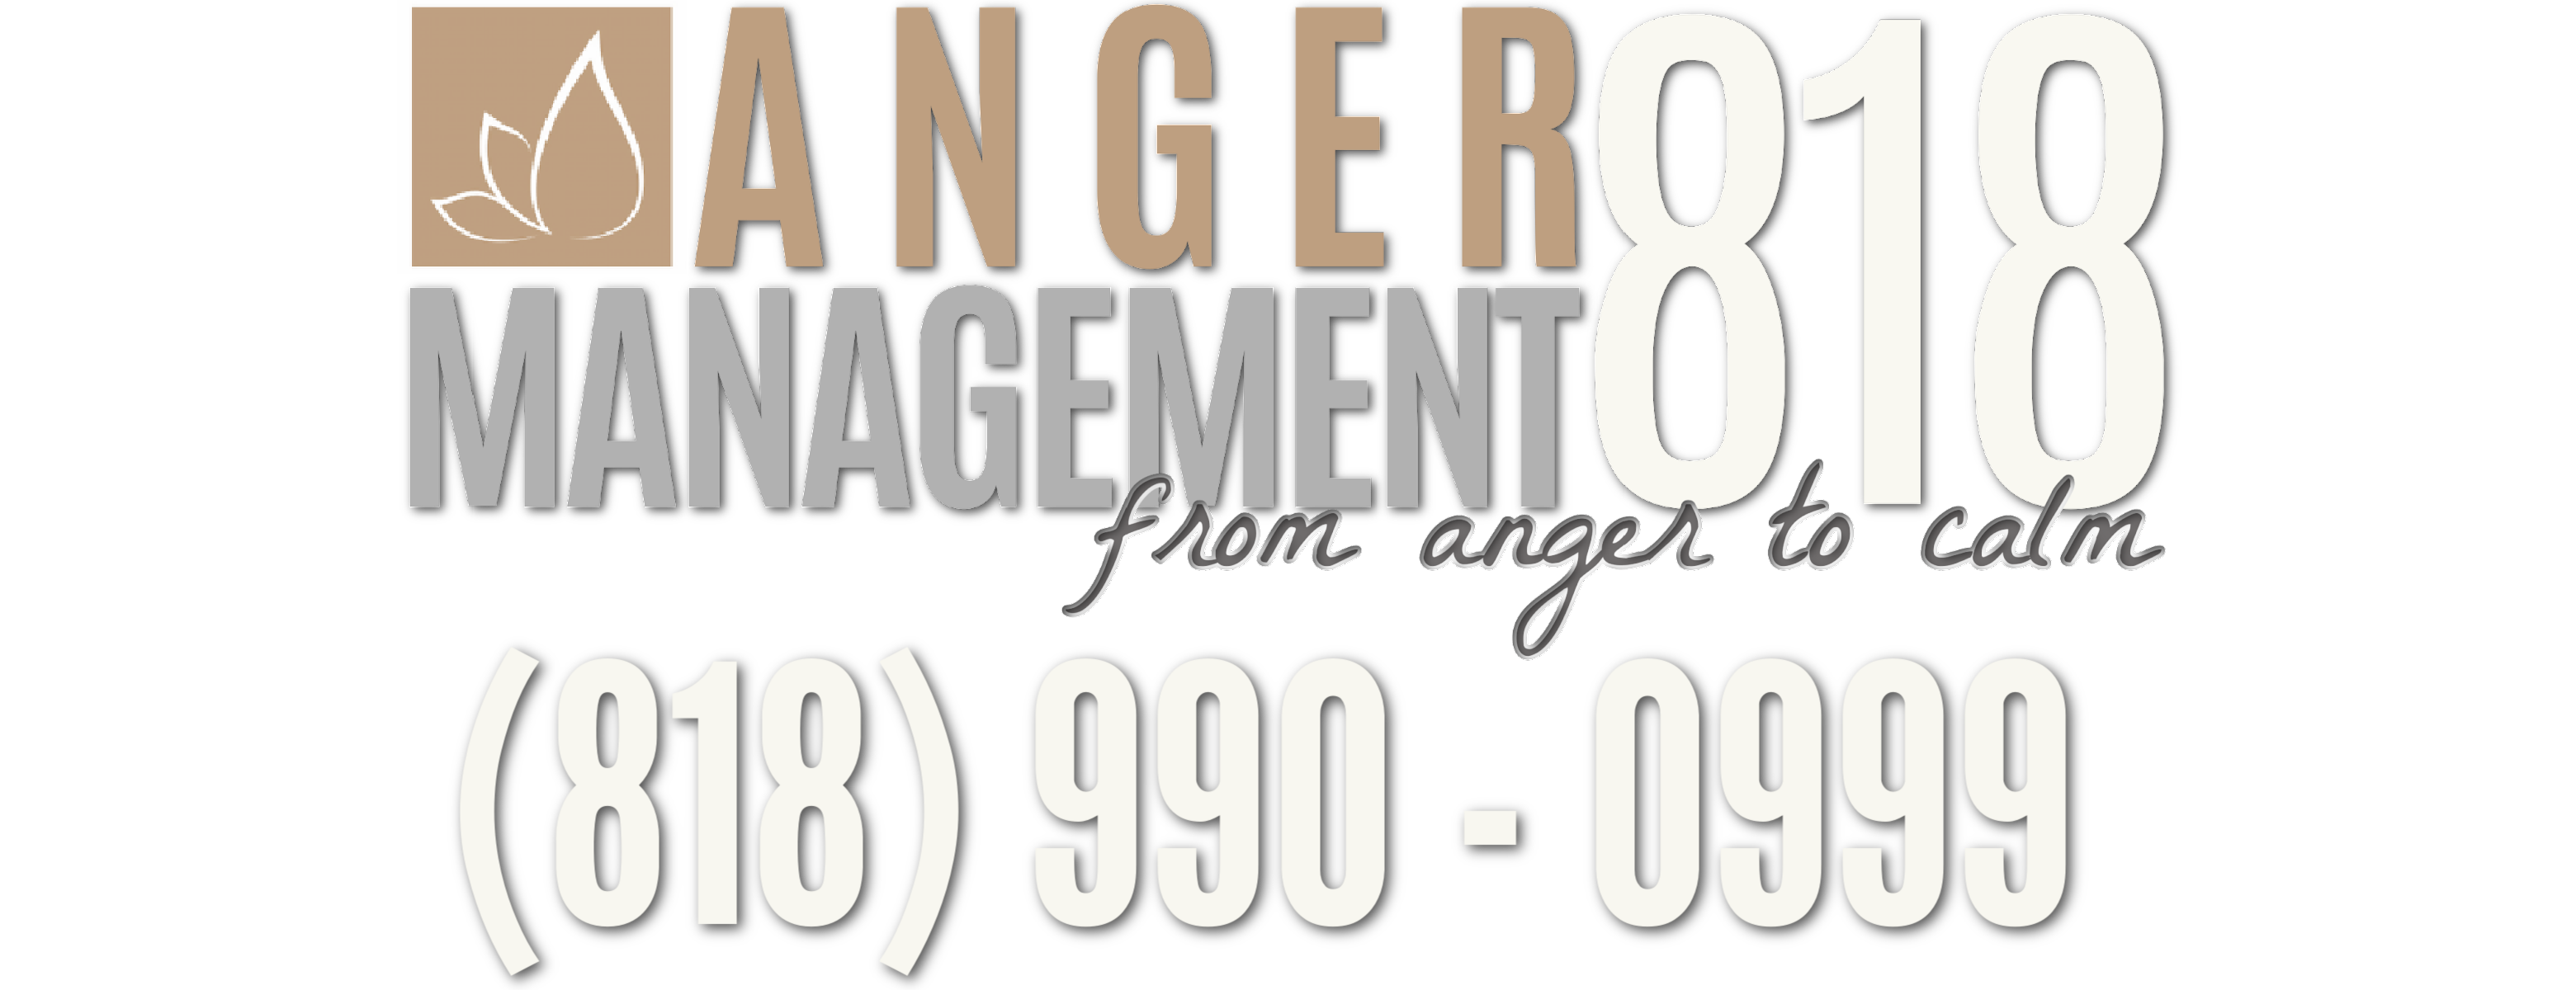 Anger Management (818) 990-0999 logo